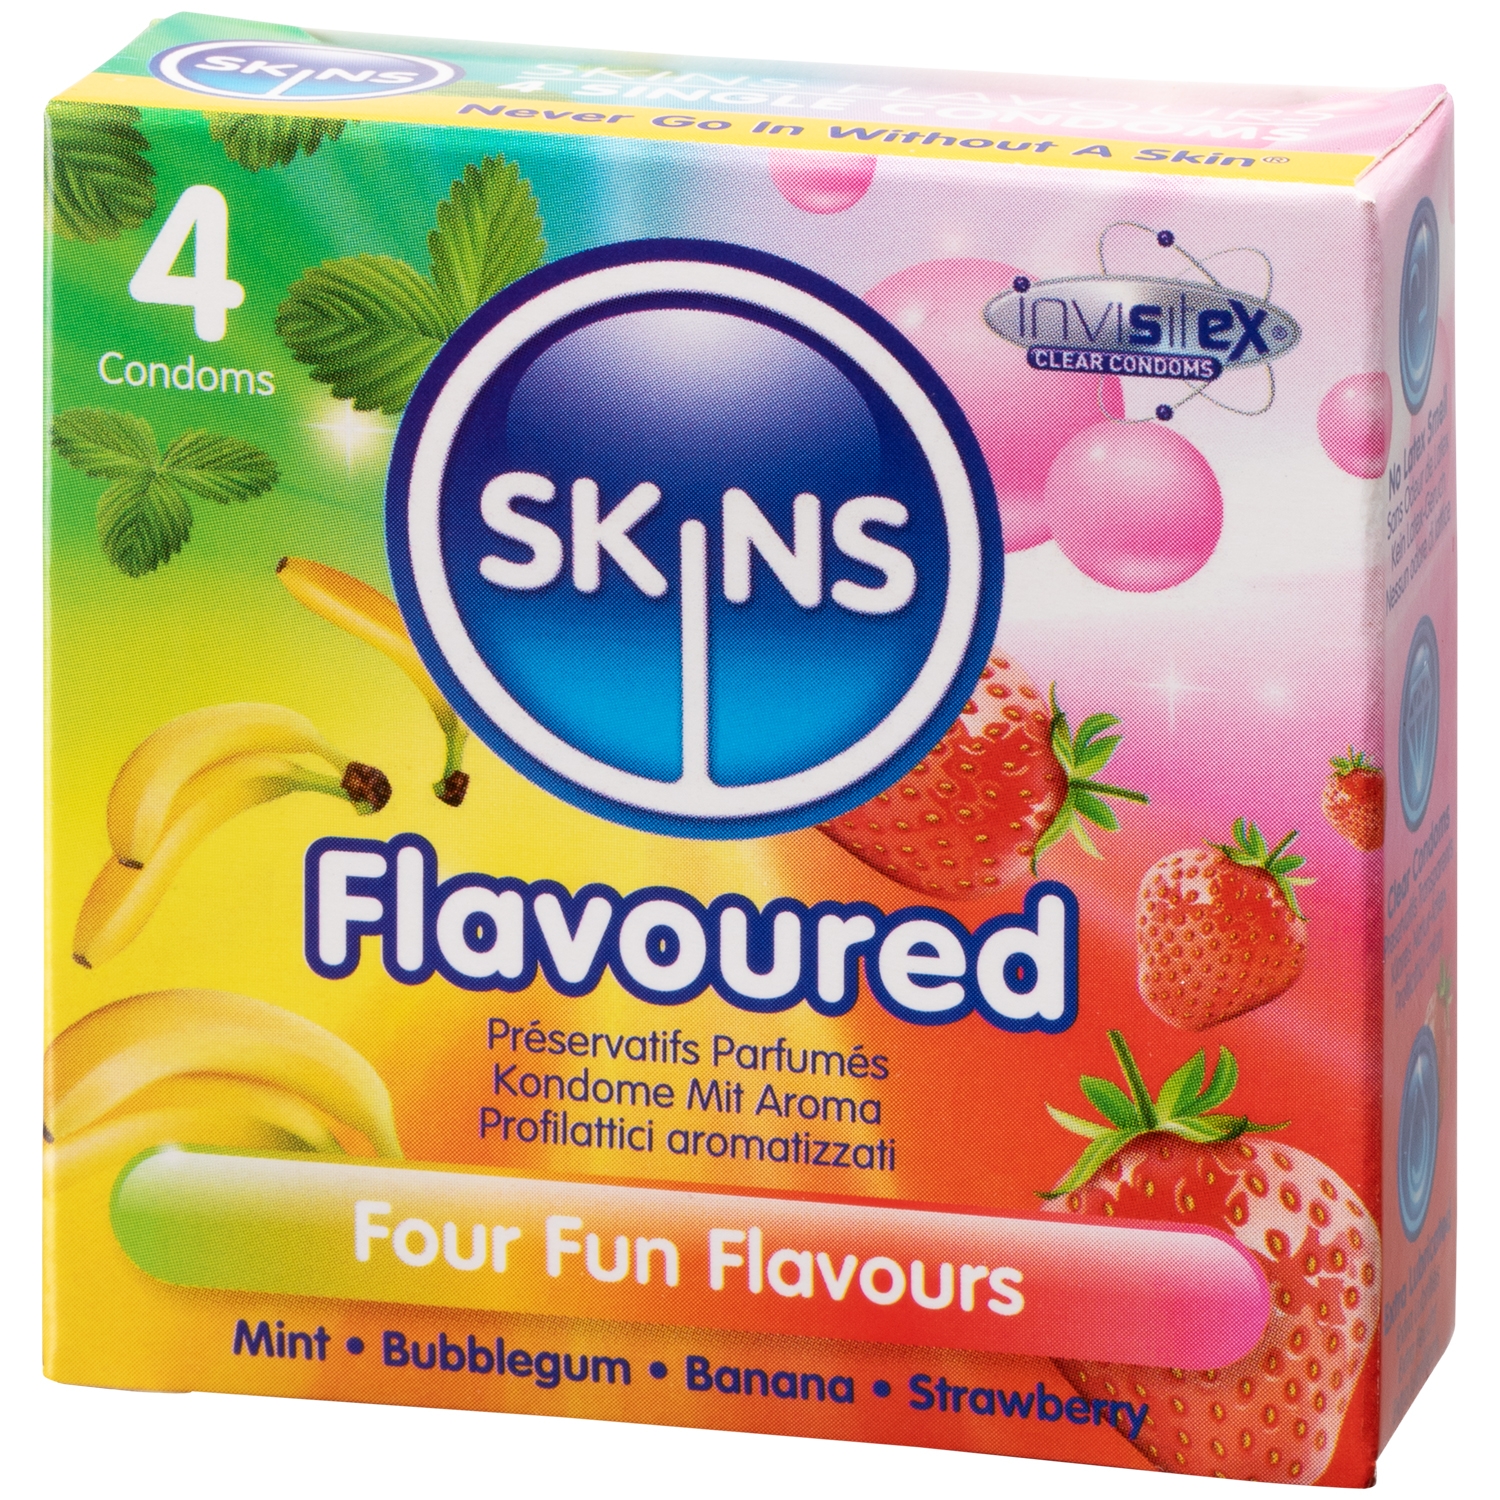 Skins Flavoured Condoms 4 pcs - Clear